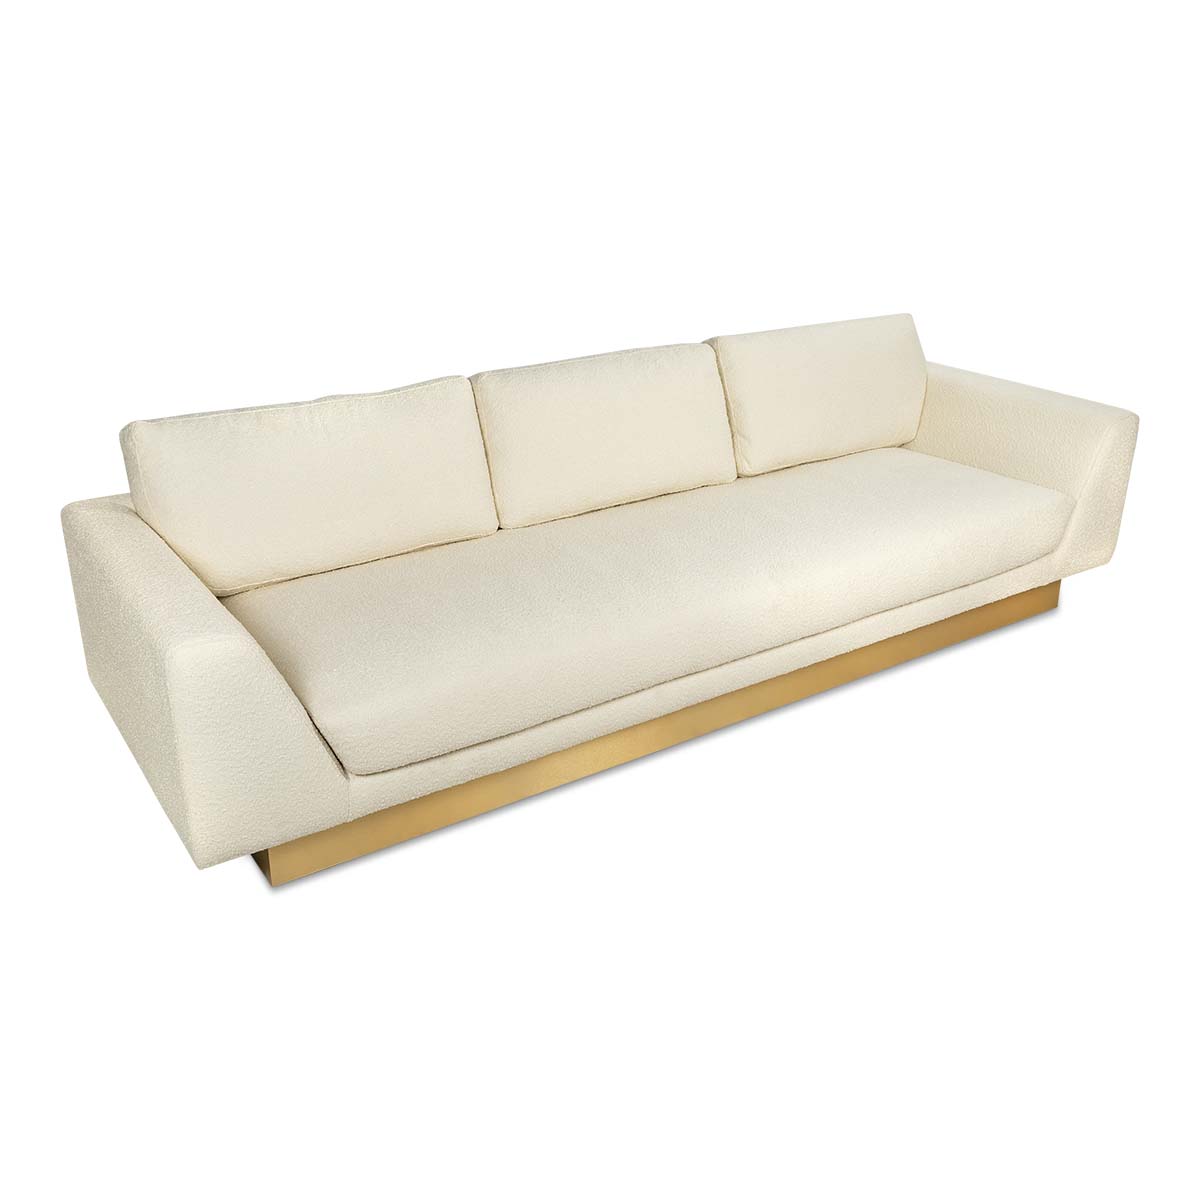 Cordoba sofa